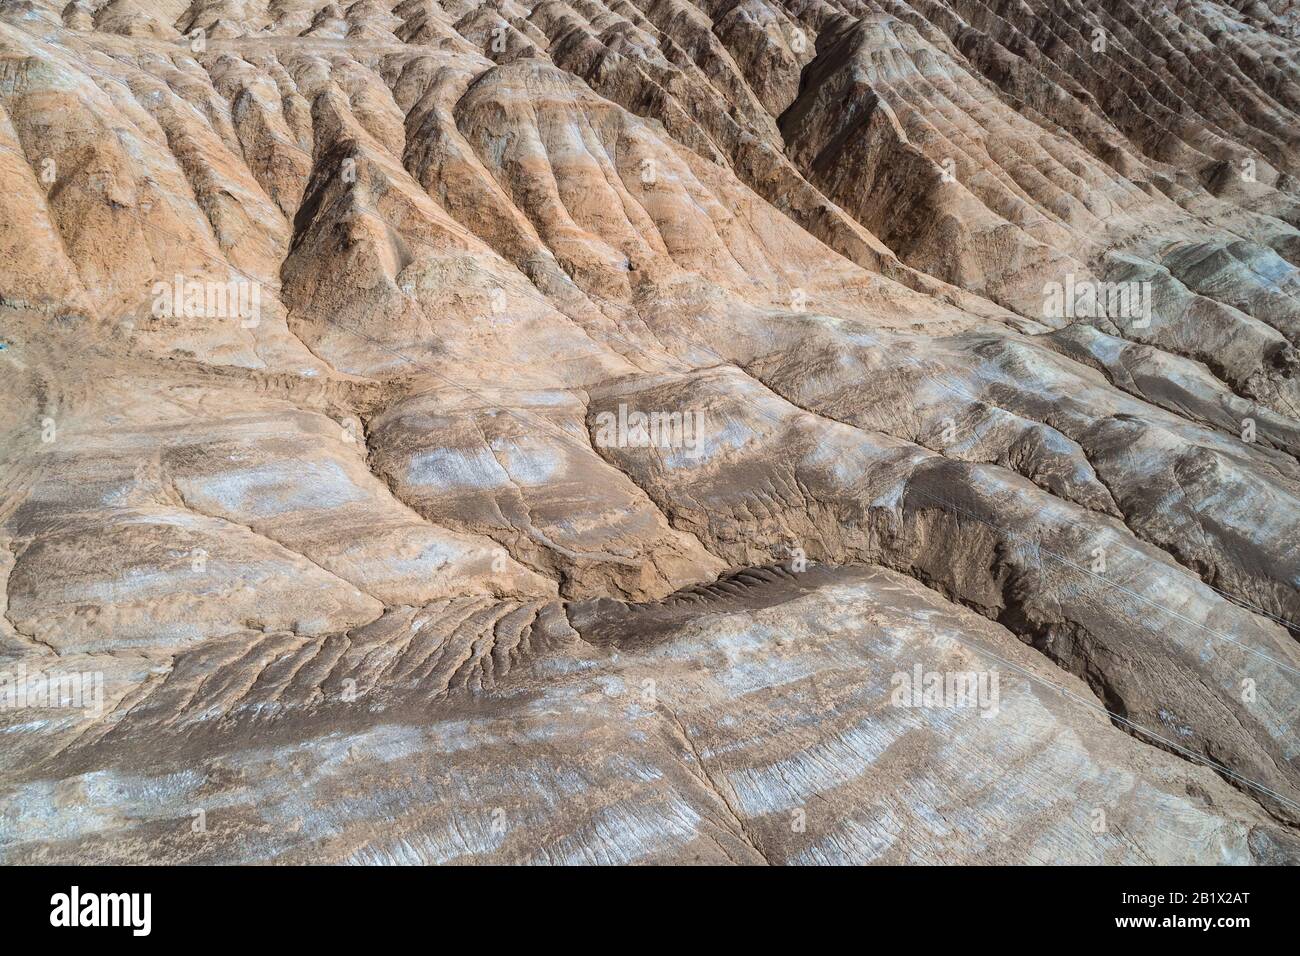 barren mountains on the rocky desert landscape Stock Photo